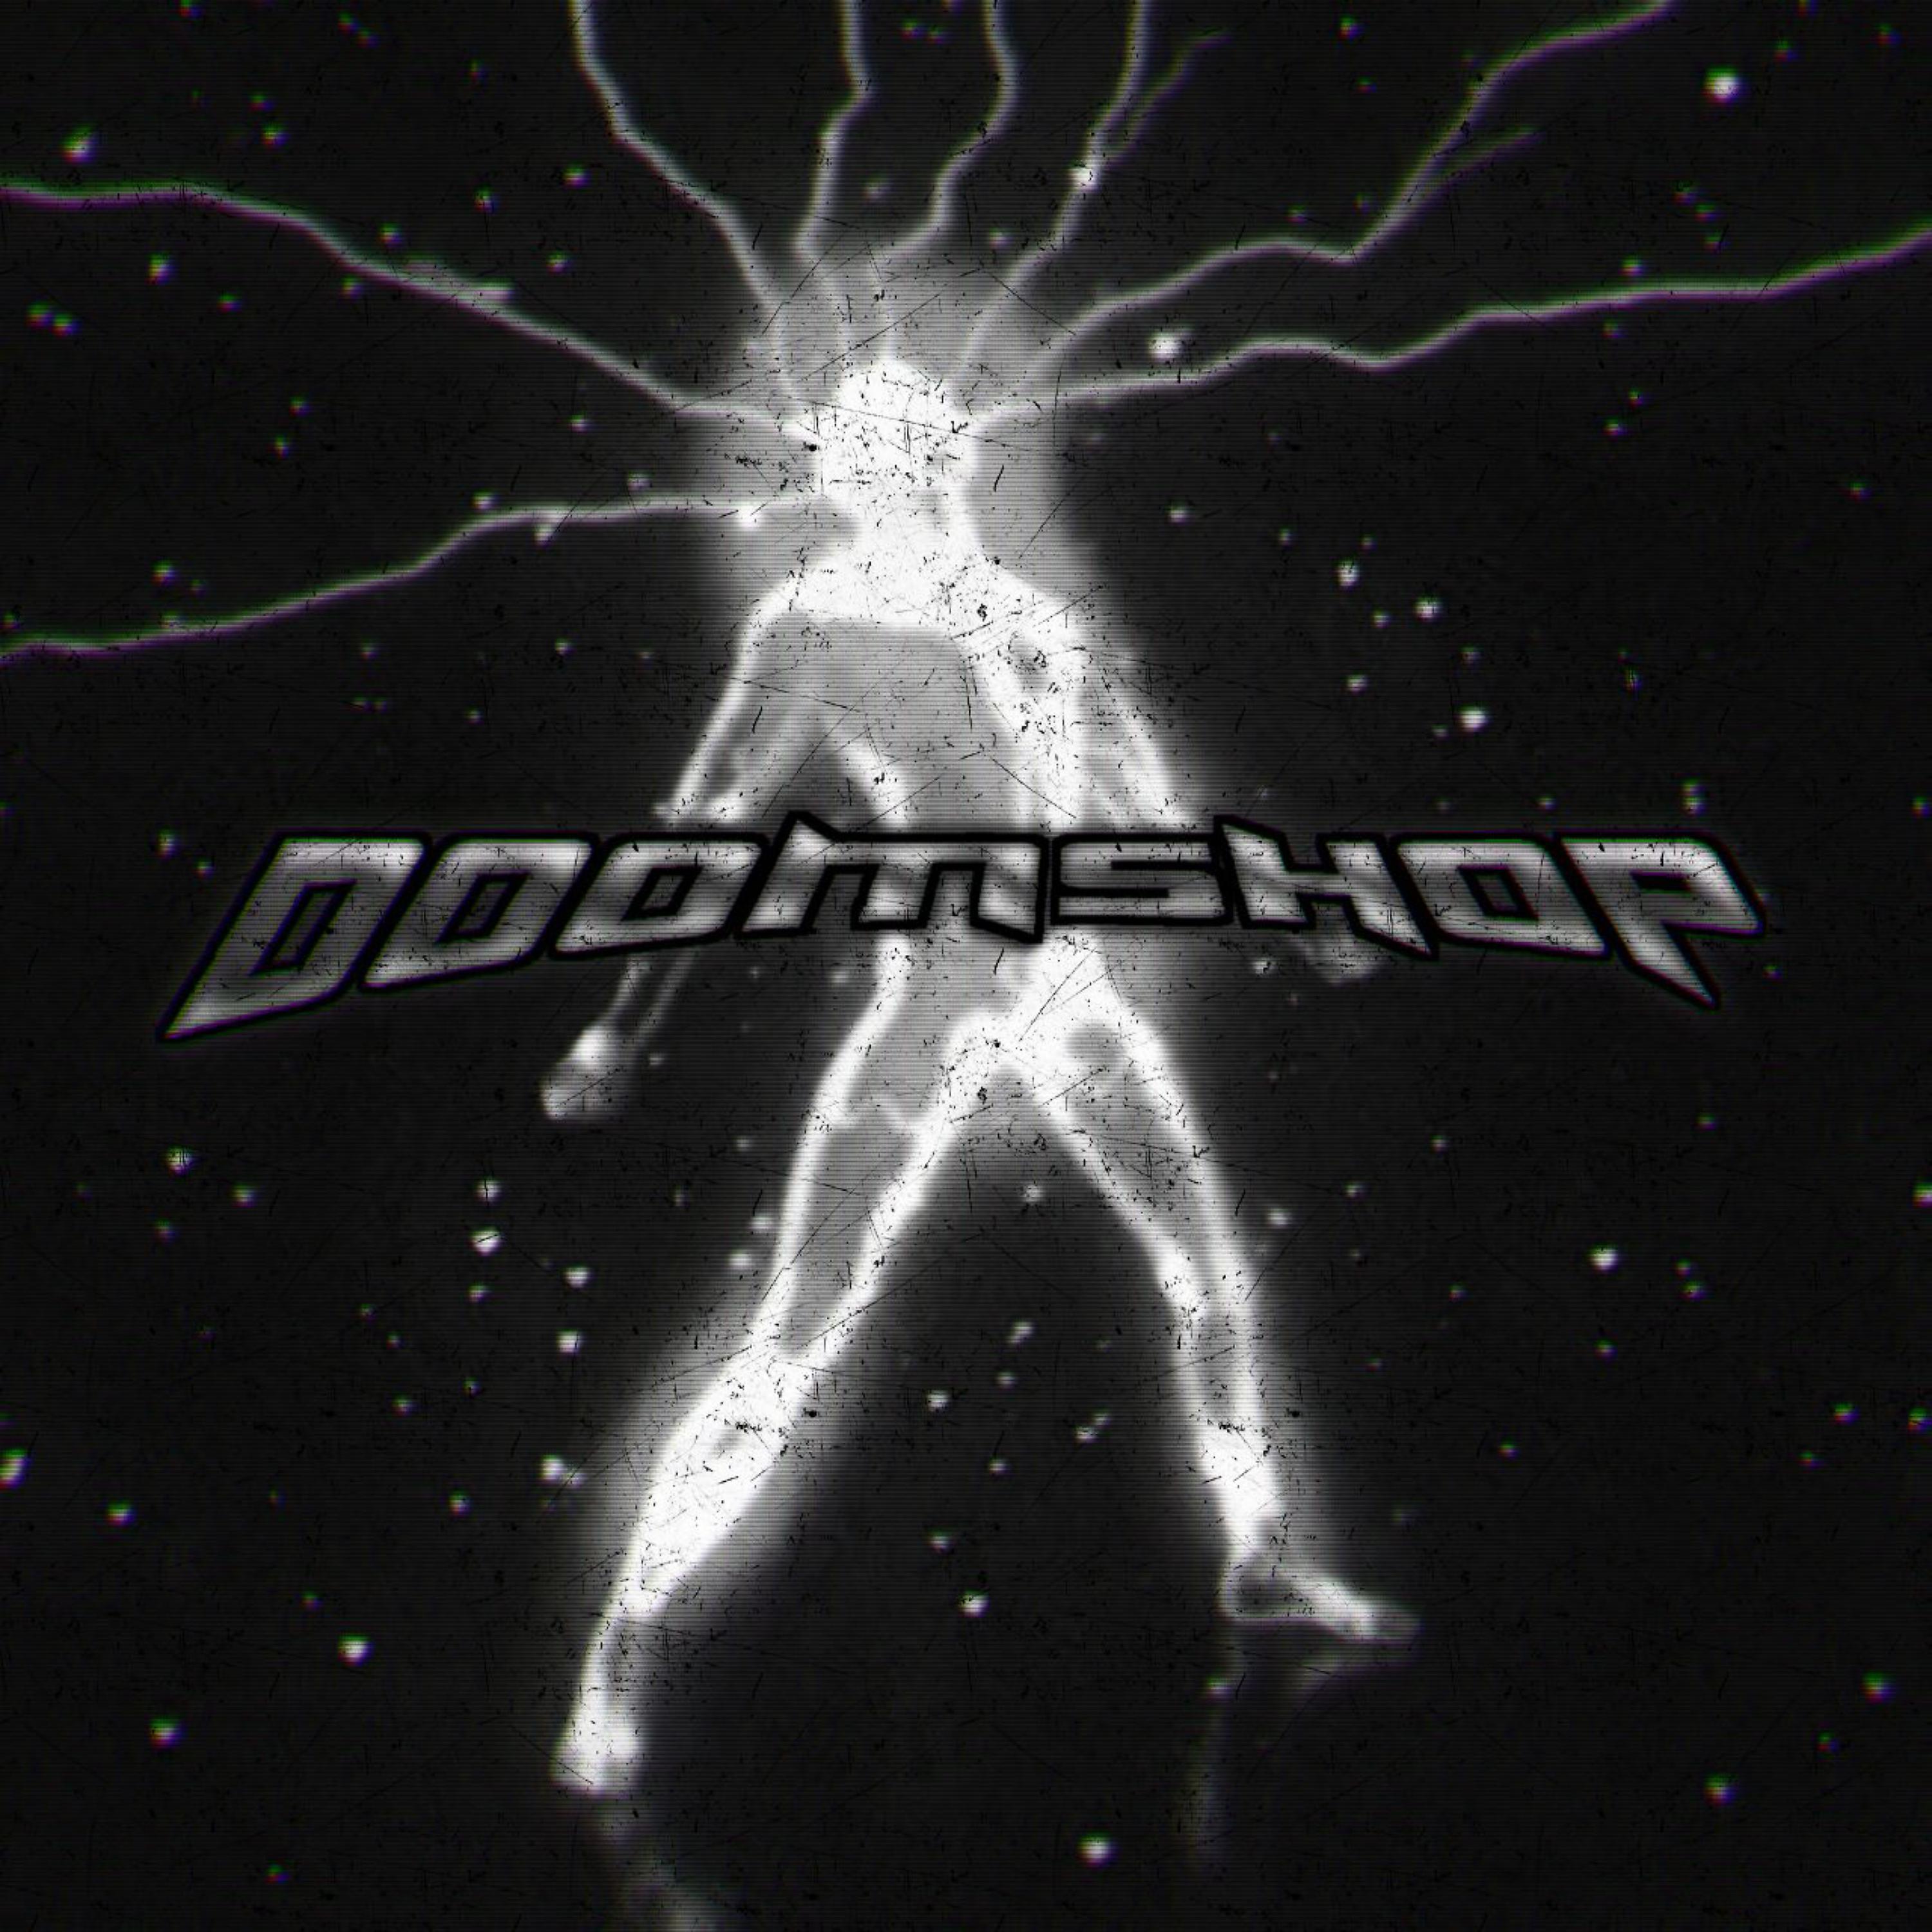 Постер альбома Doomshop